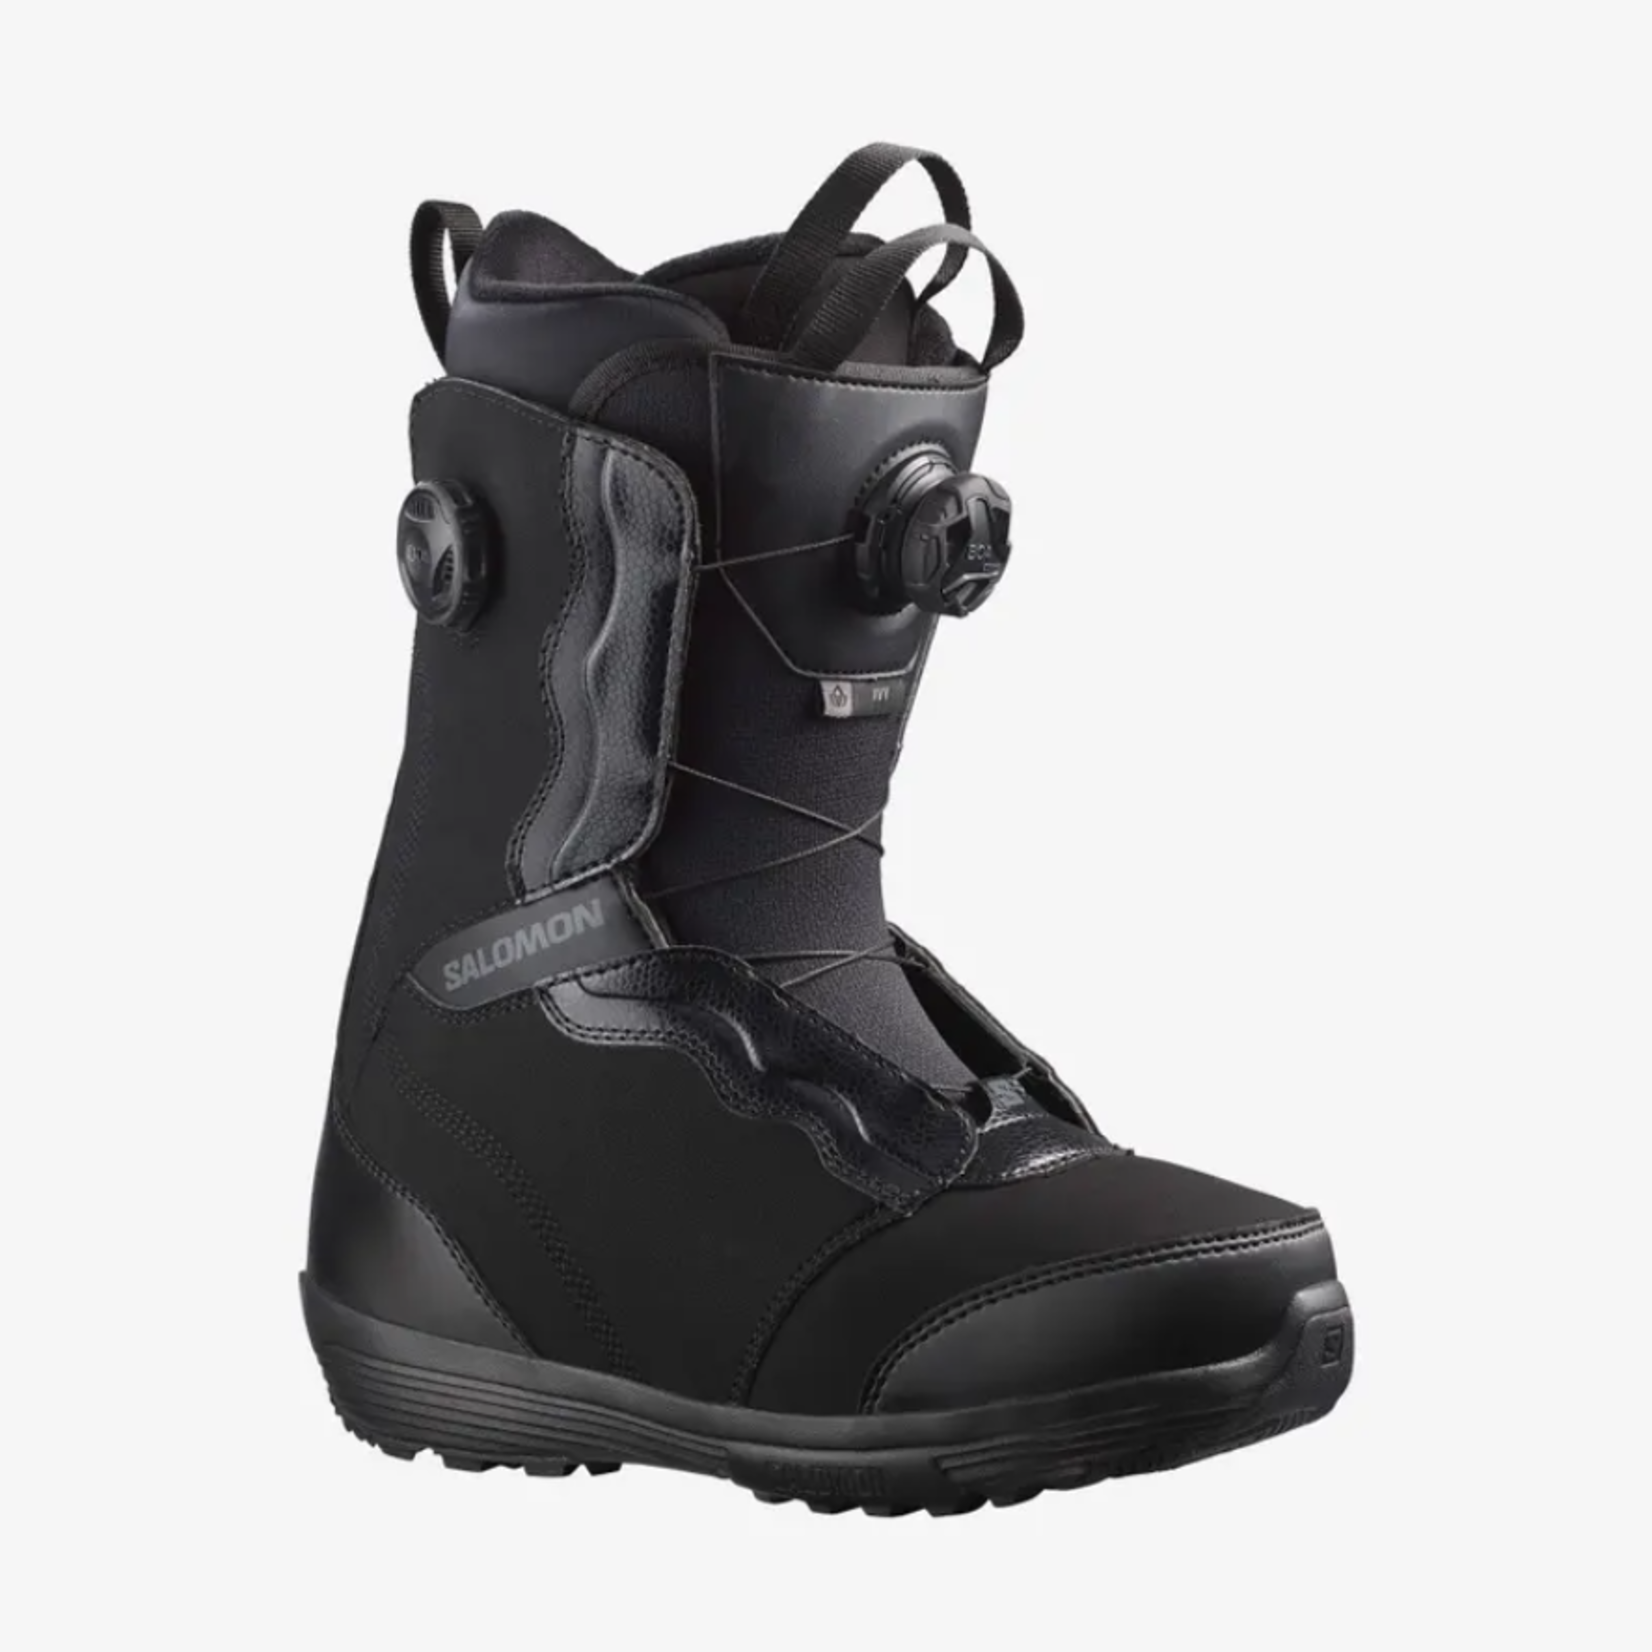 Salomon Snowboard Boots Ivy BOA